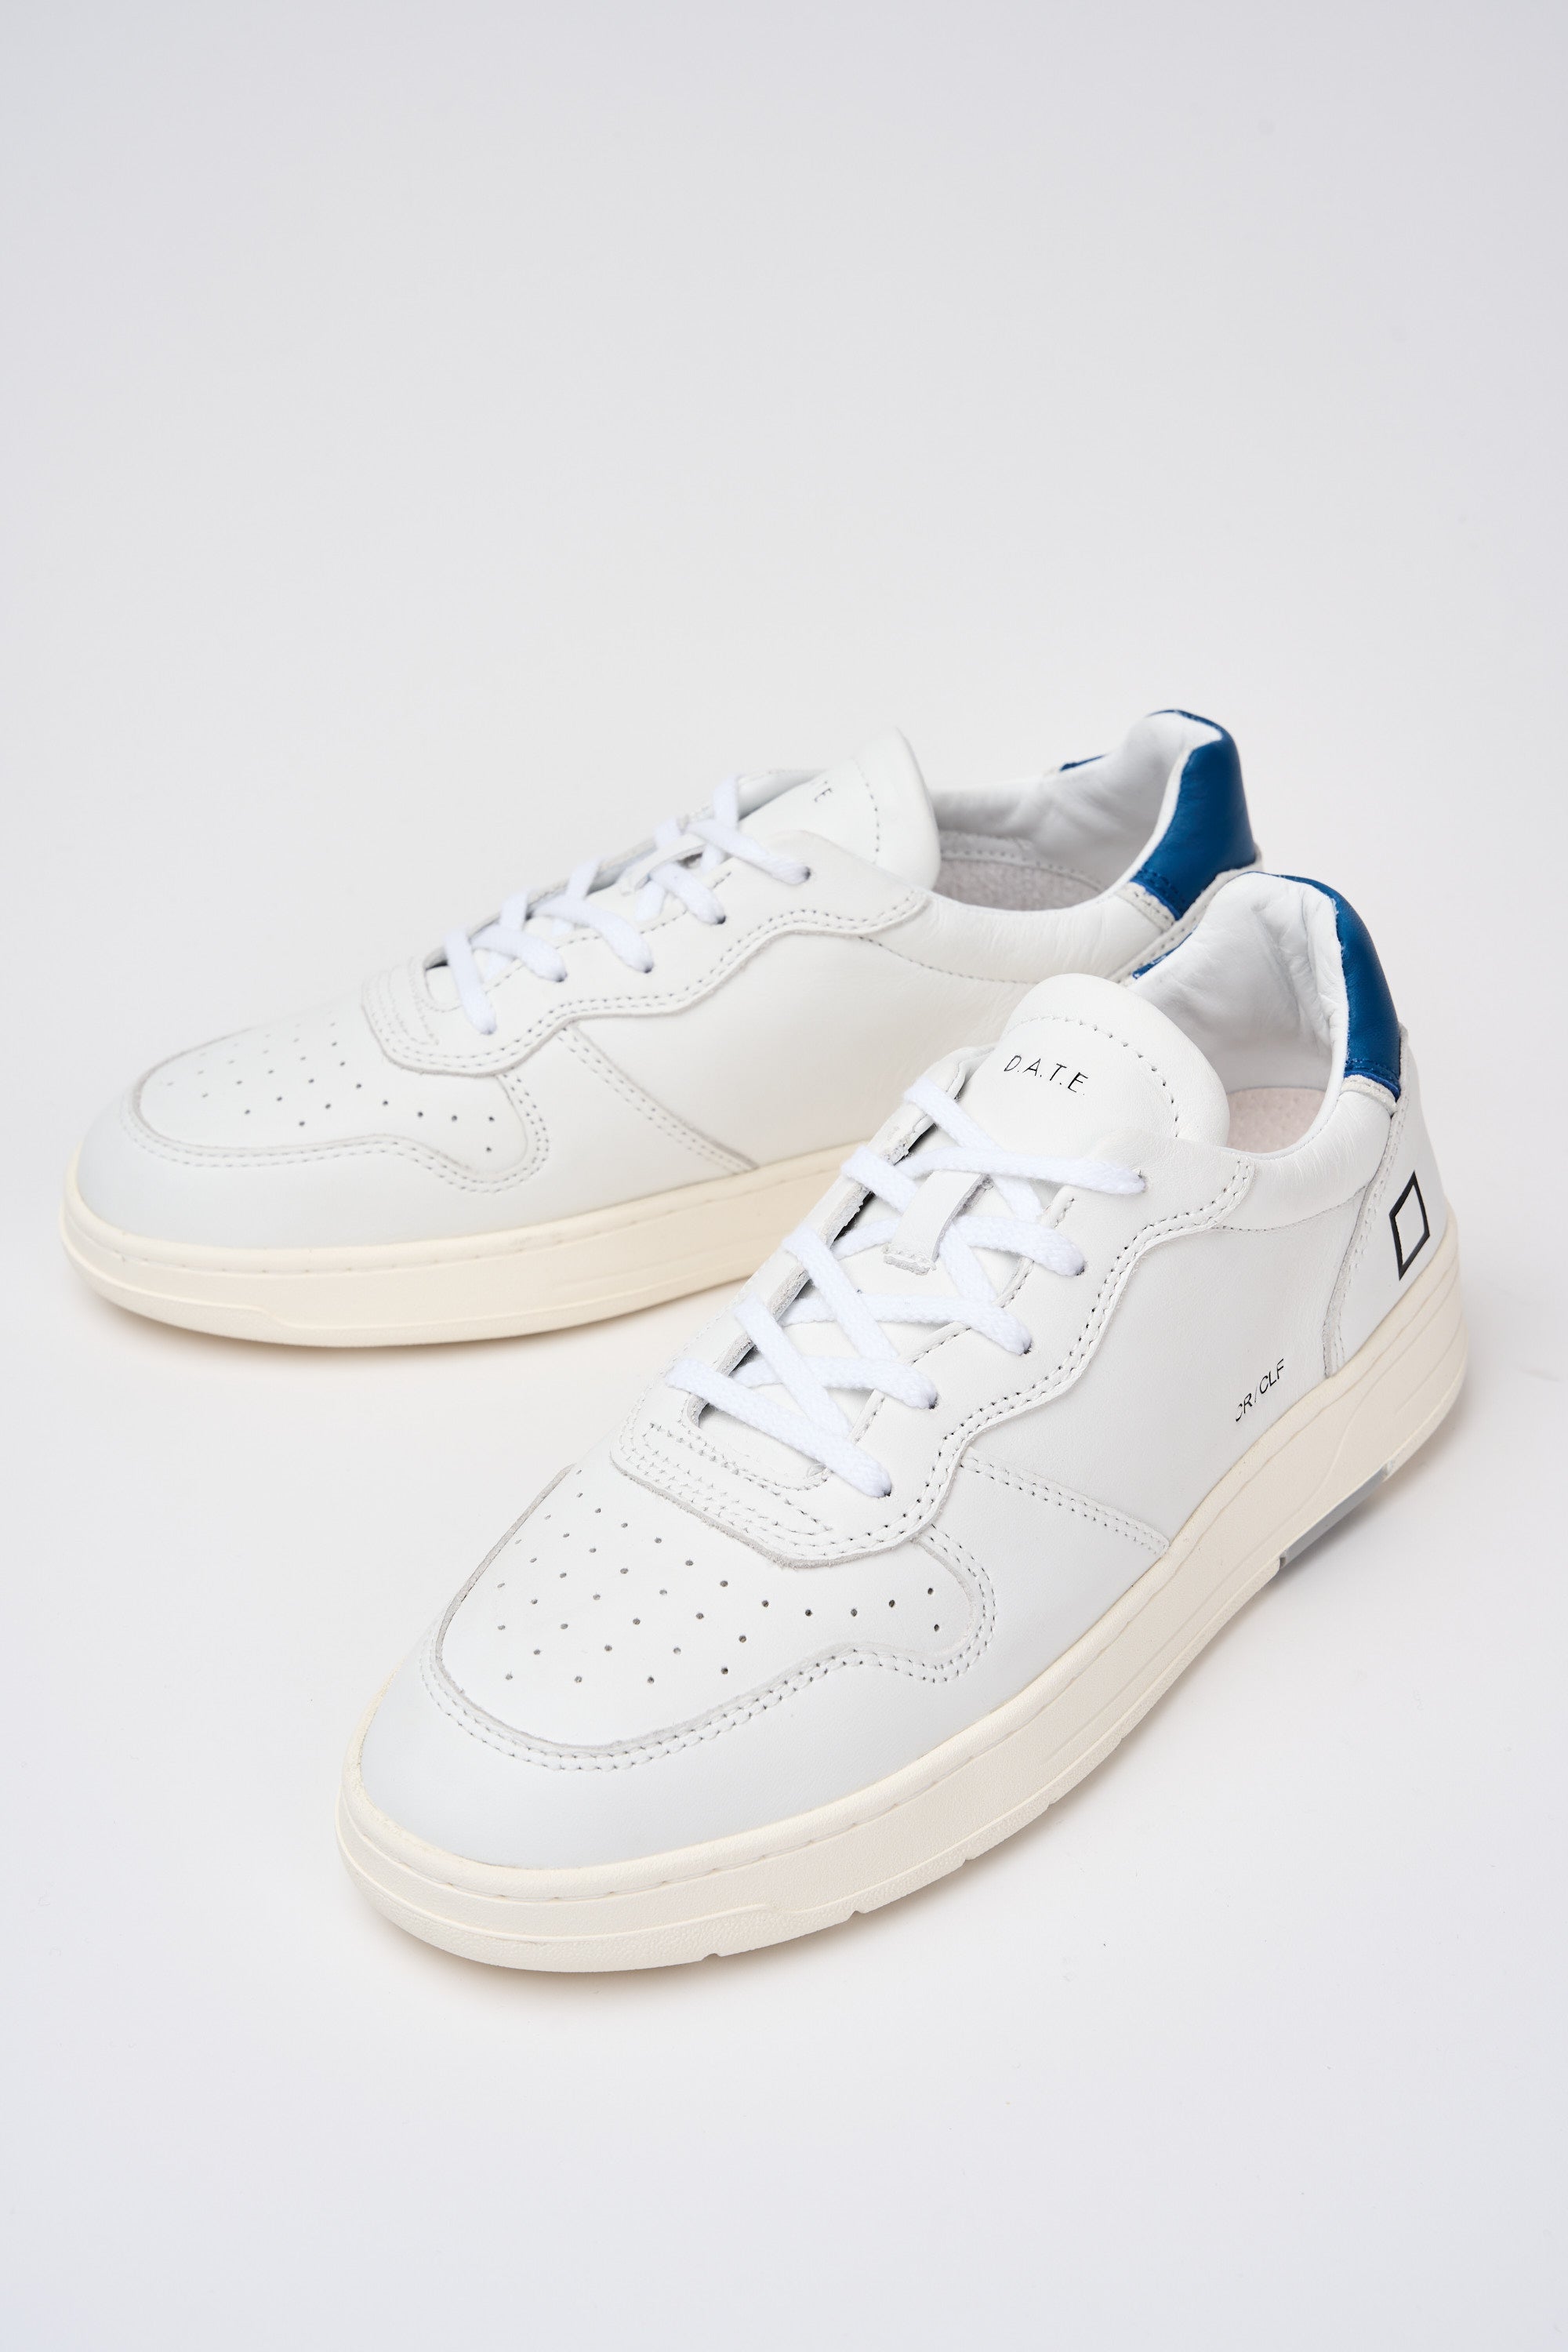 D.A.T.E. Sneaker Court aus weißem/blauem Leder-6